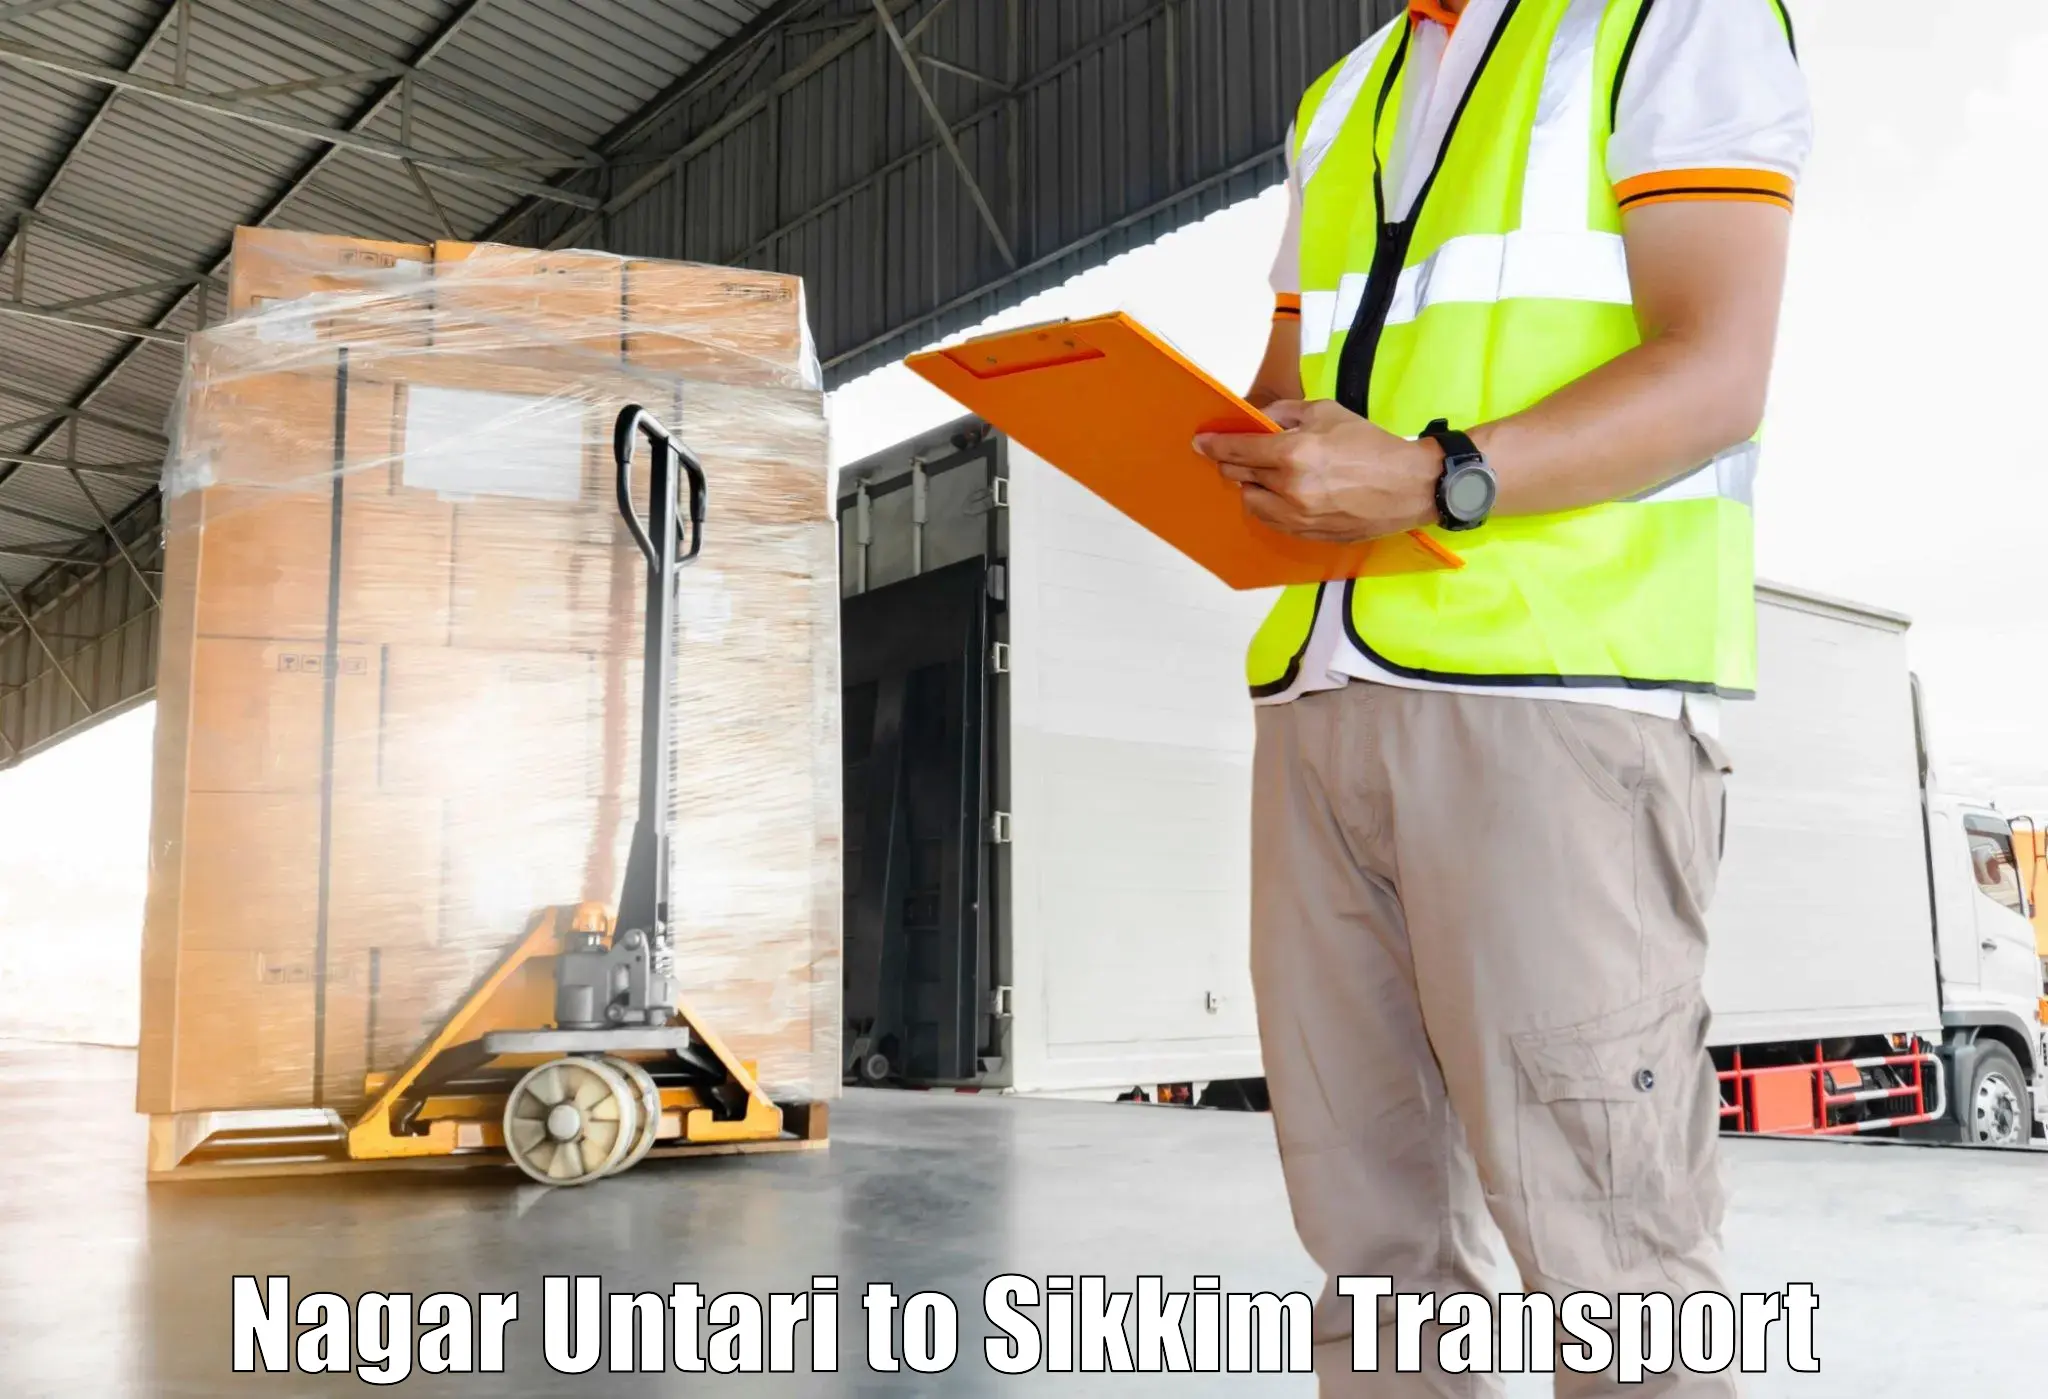 Vehicle transport services in Nagar Untari to Geyzing